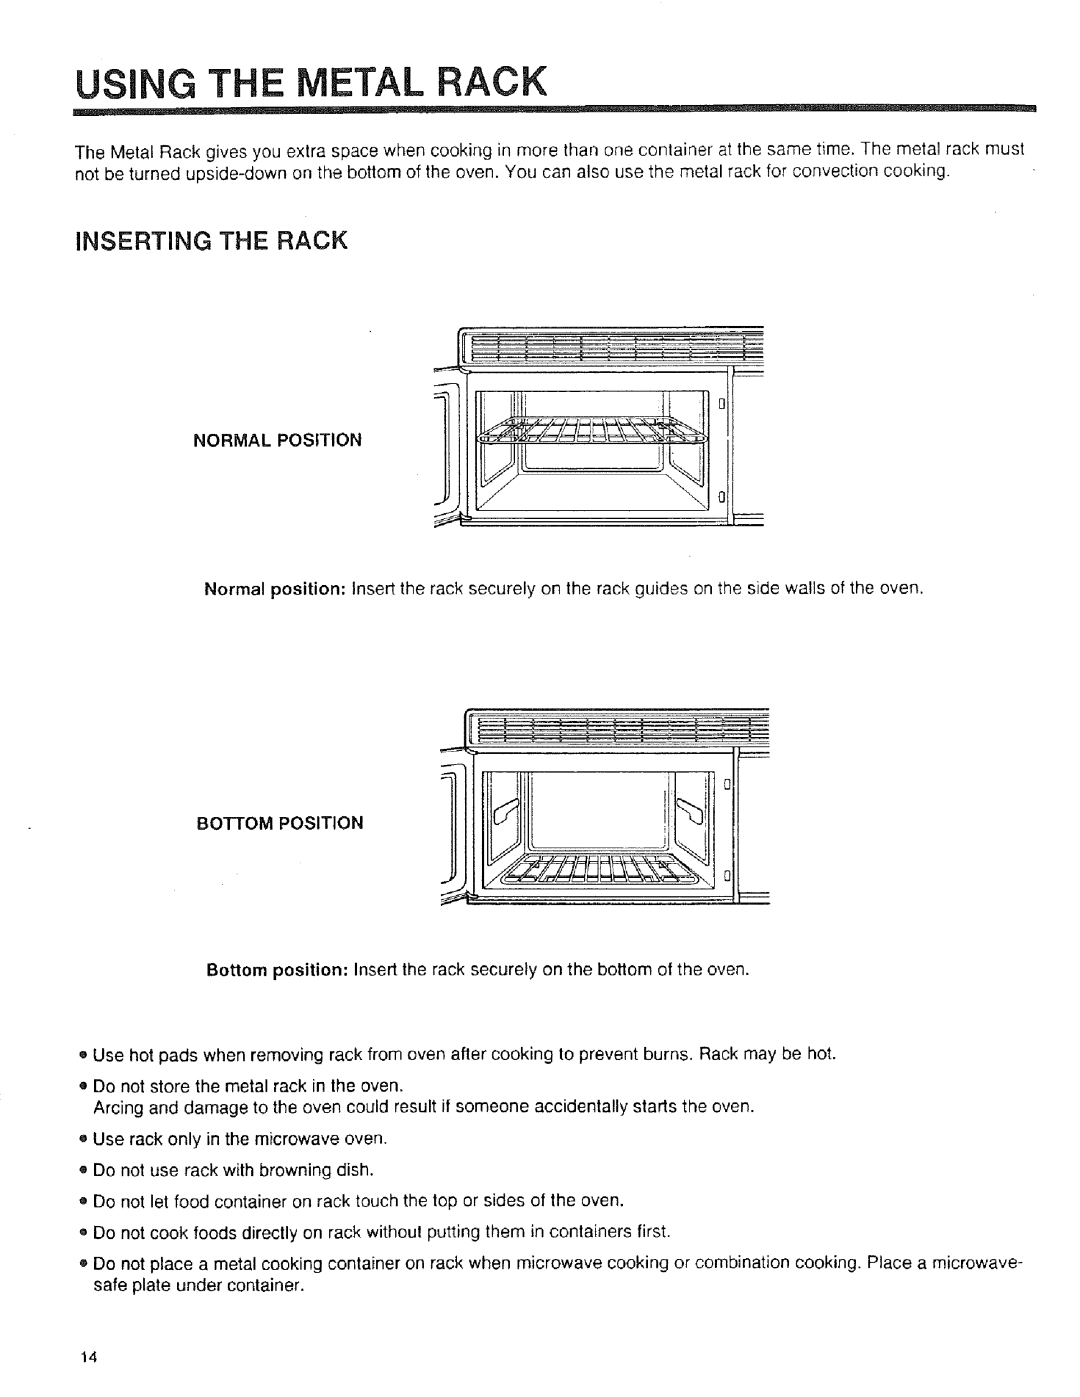 Sears 89950, 89952, 89951 manual Using The Metal Rack, Inserting The Rack 